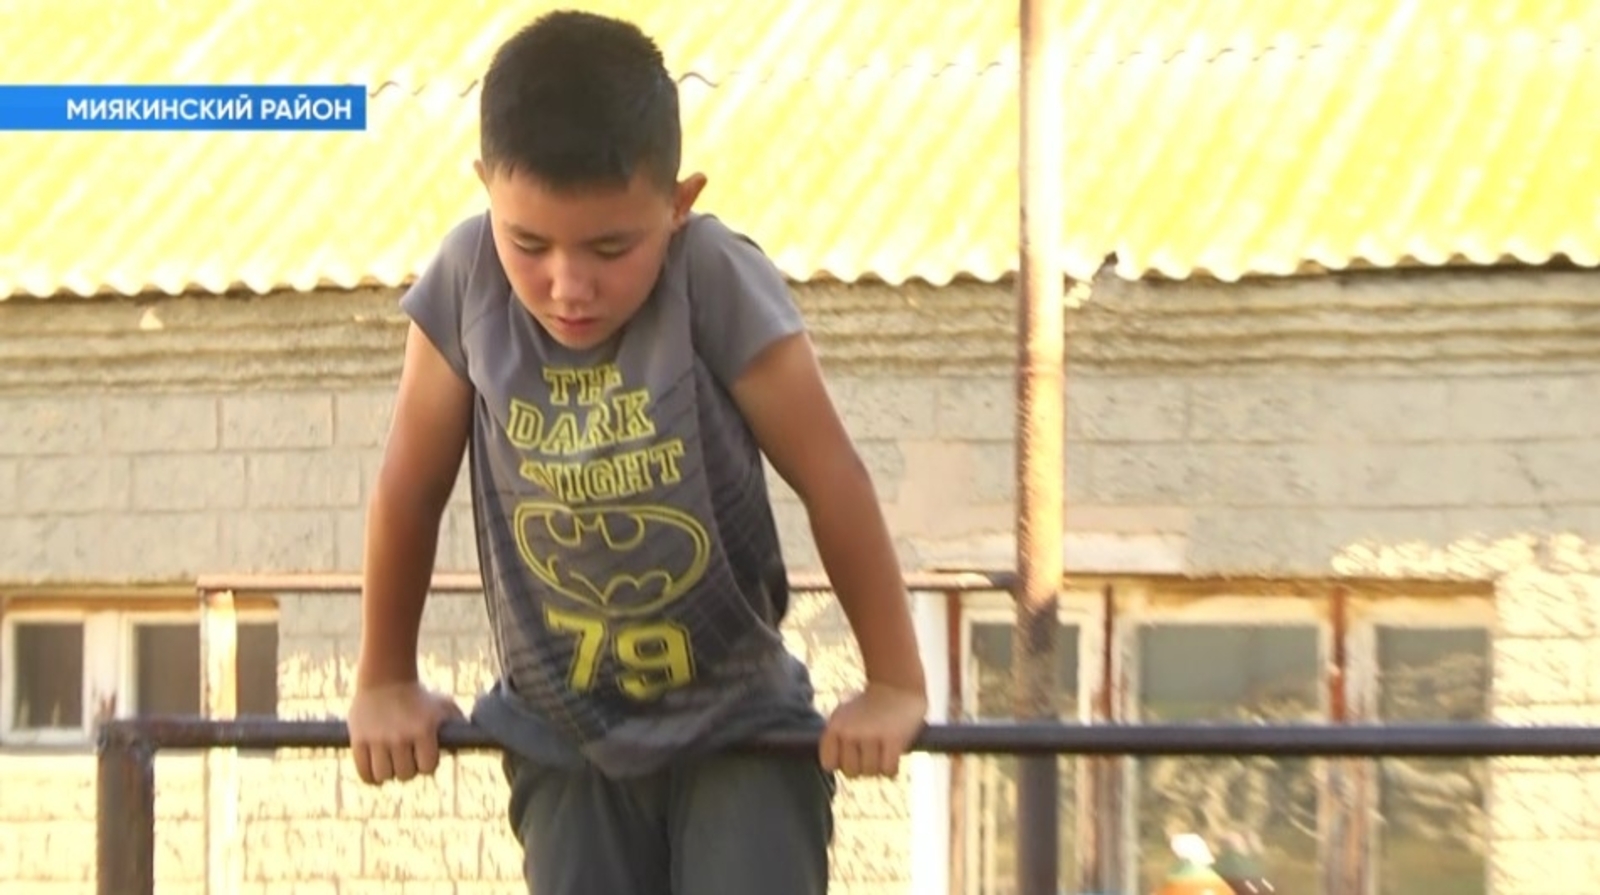 Семилетний мальчик из Башкирии установил спортивный рекорд